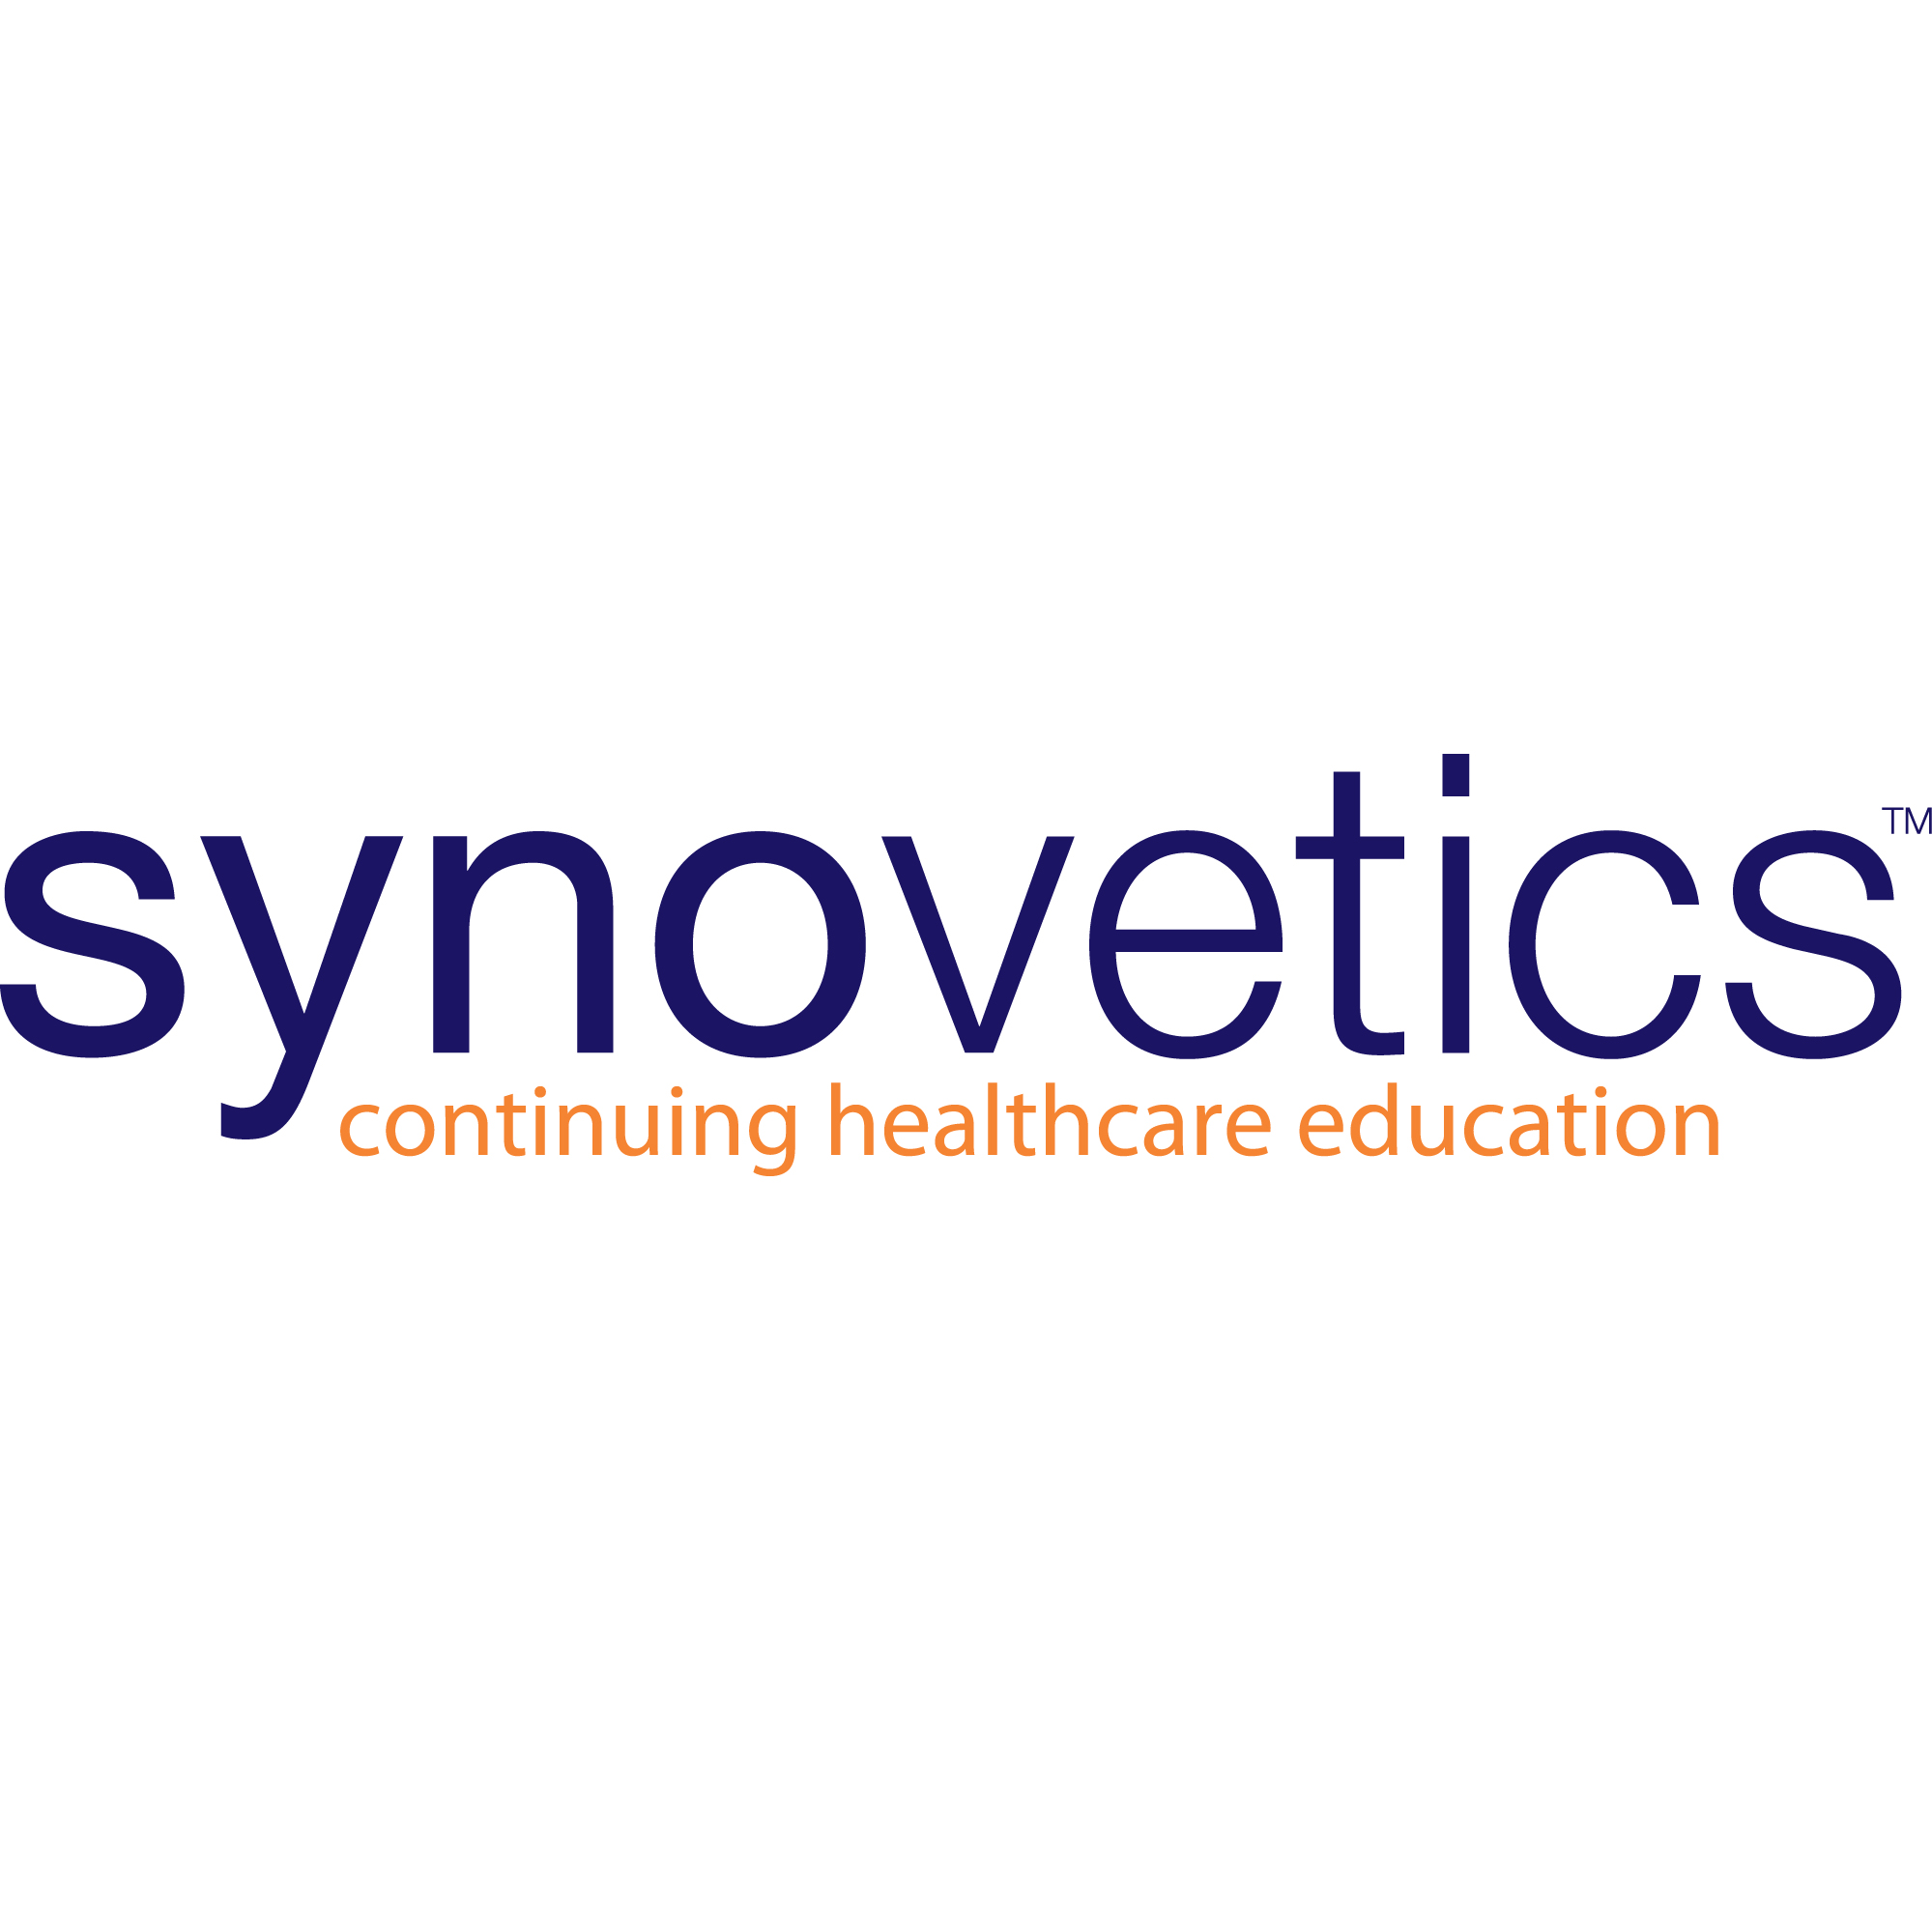 Synovetics